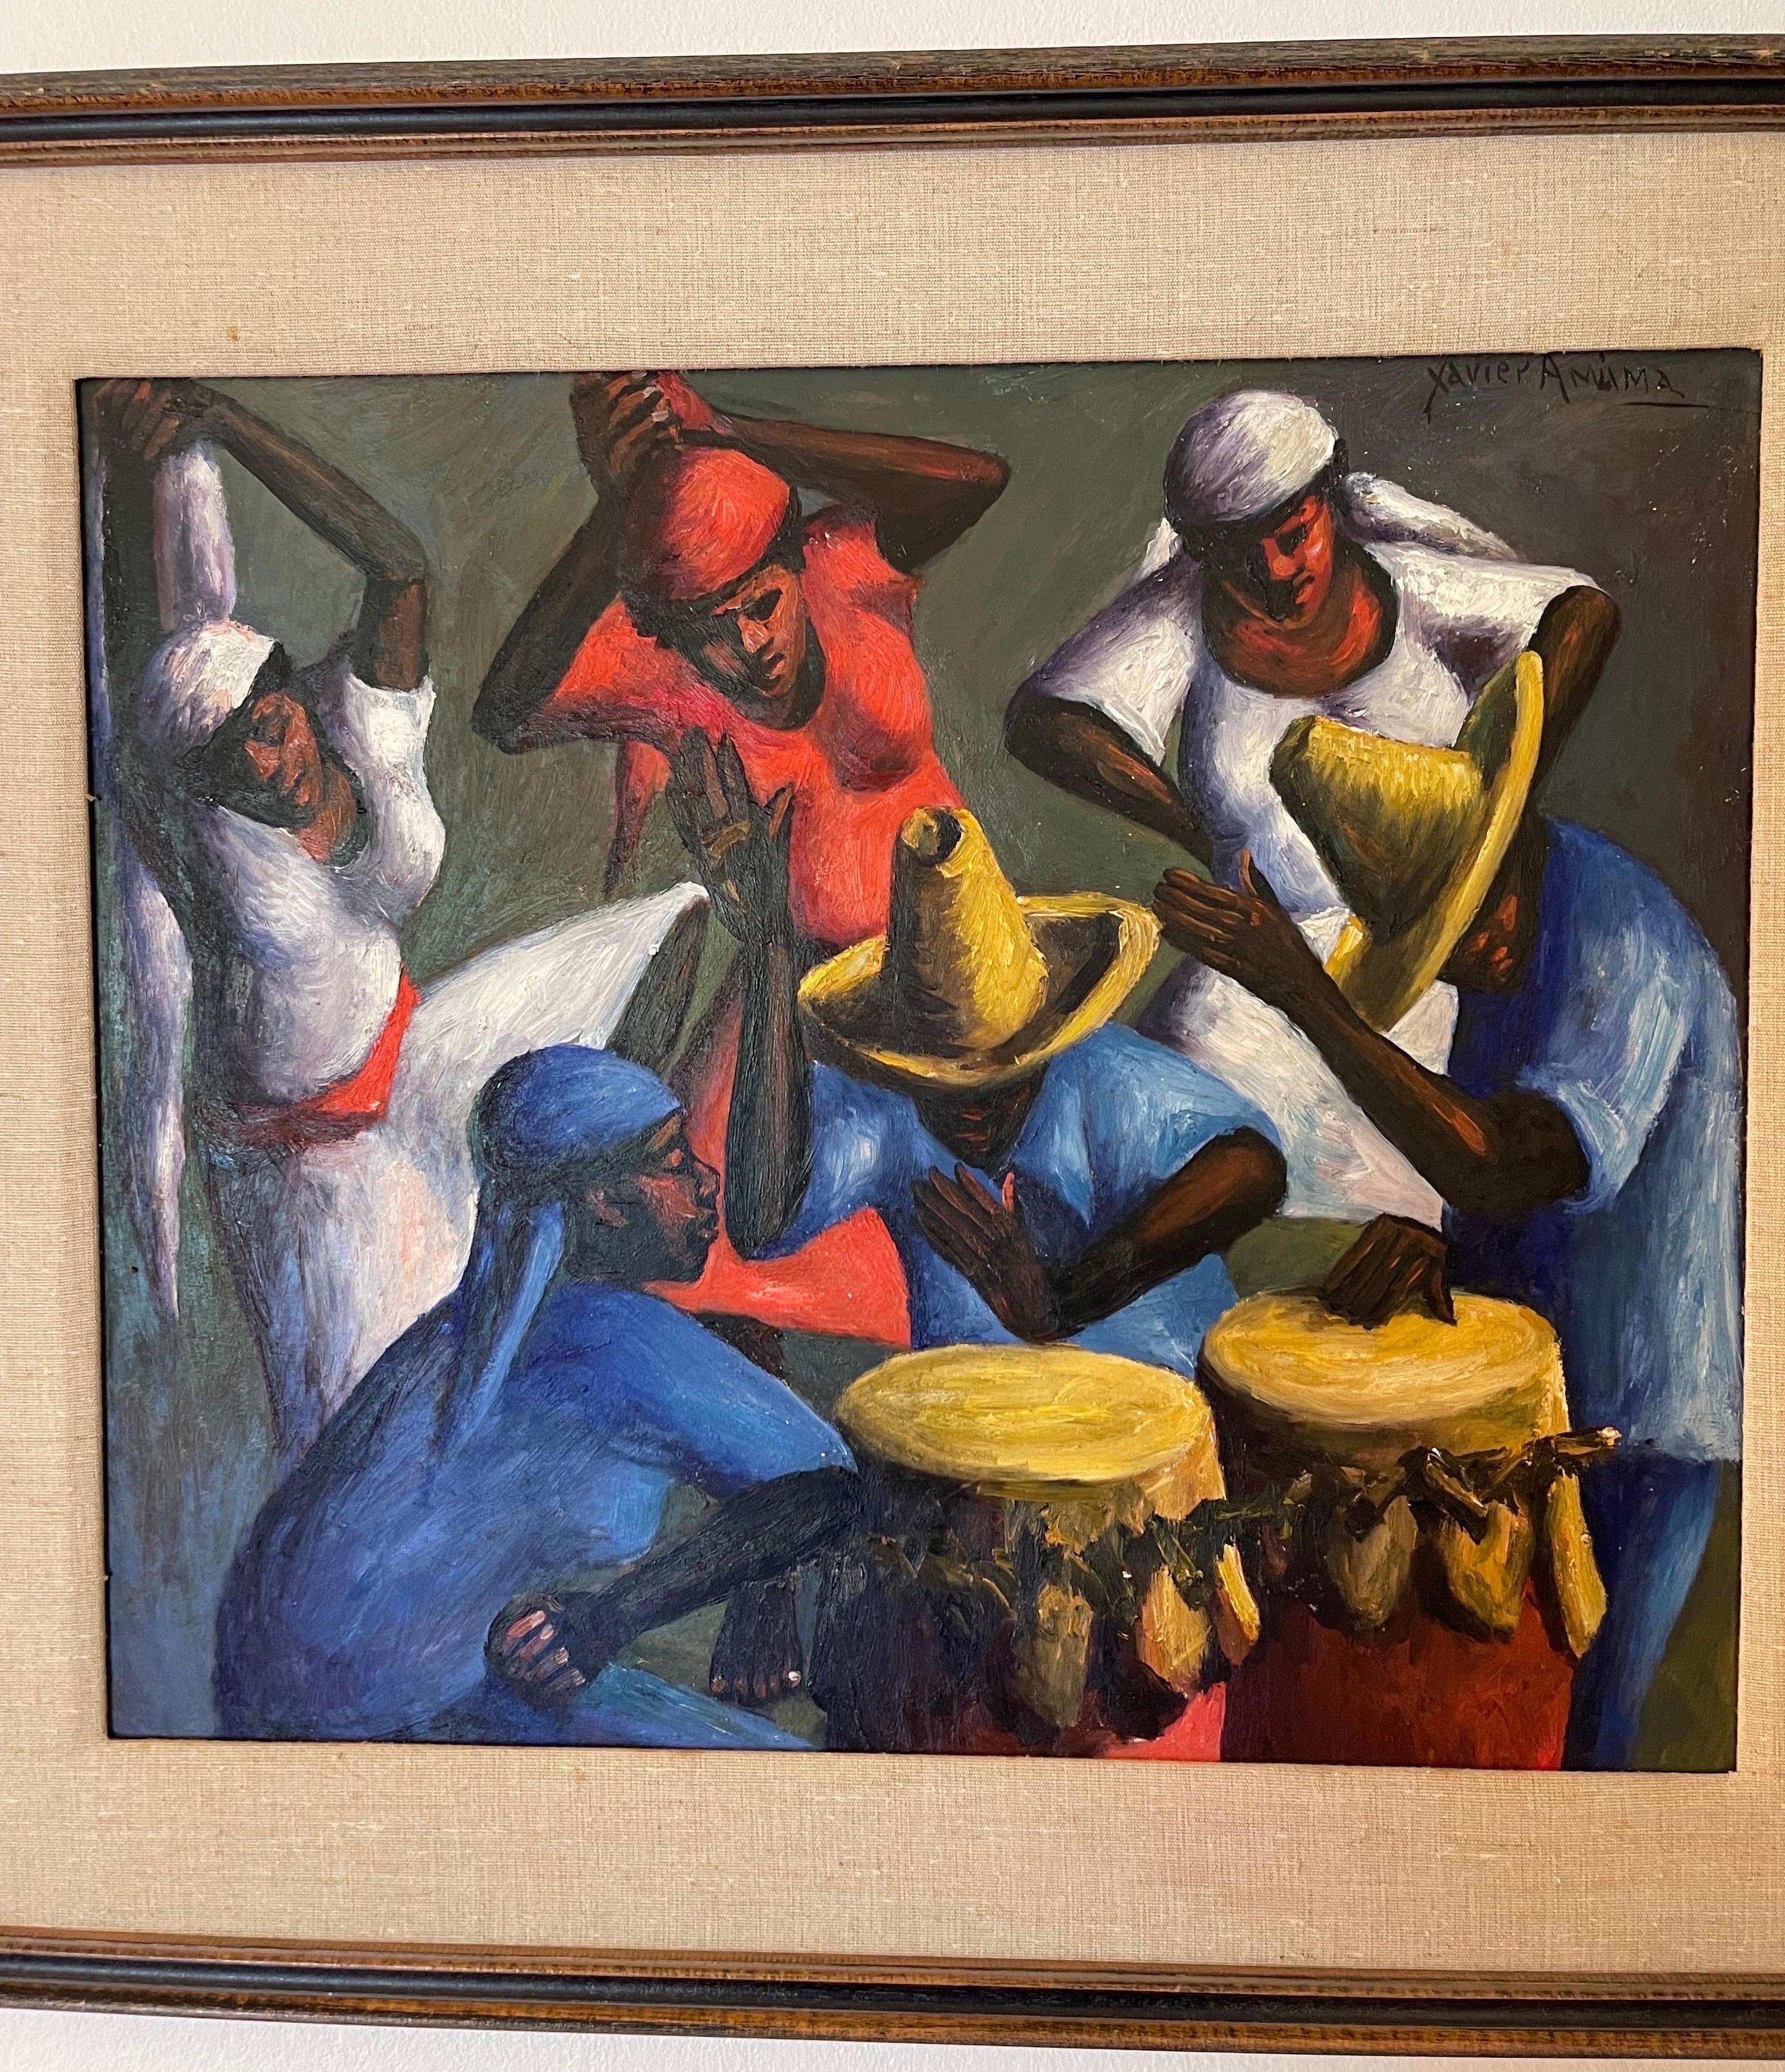 Peint Tambouristes et danseurs haïtiens de Xaviar Amiana, 1956 en vente